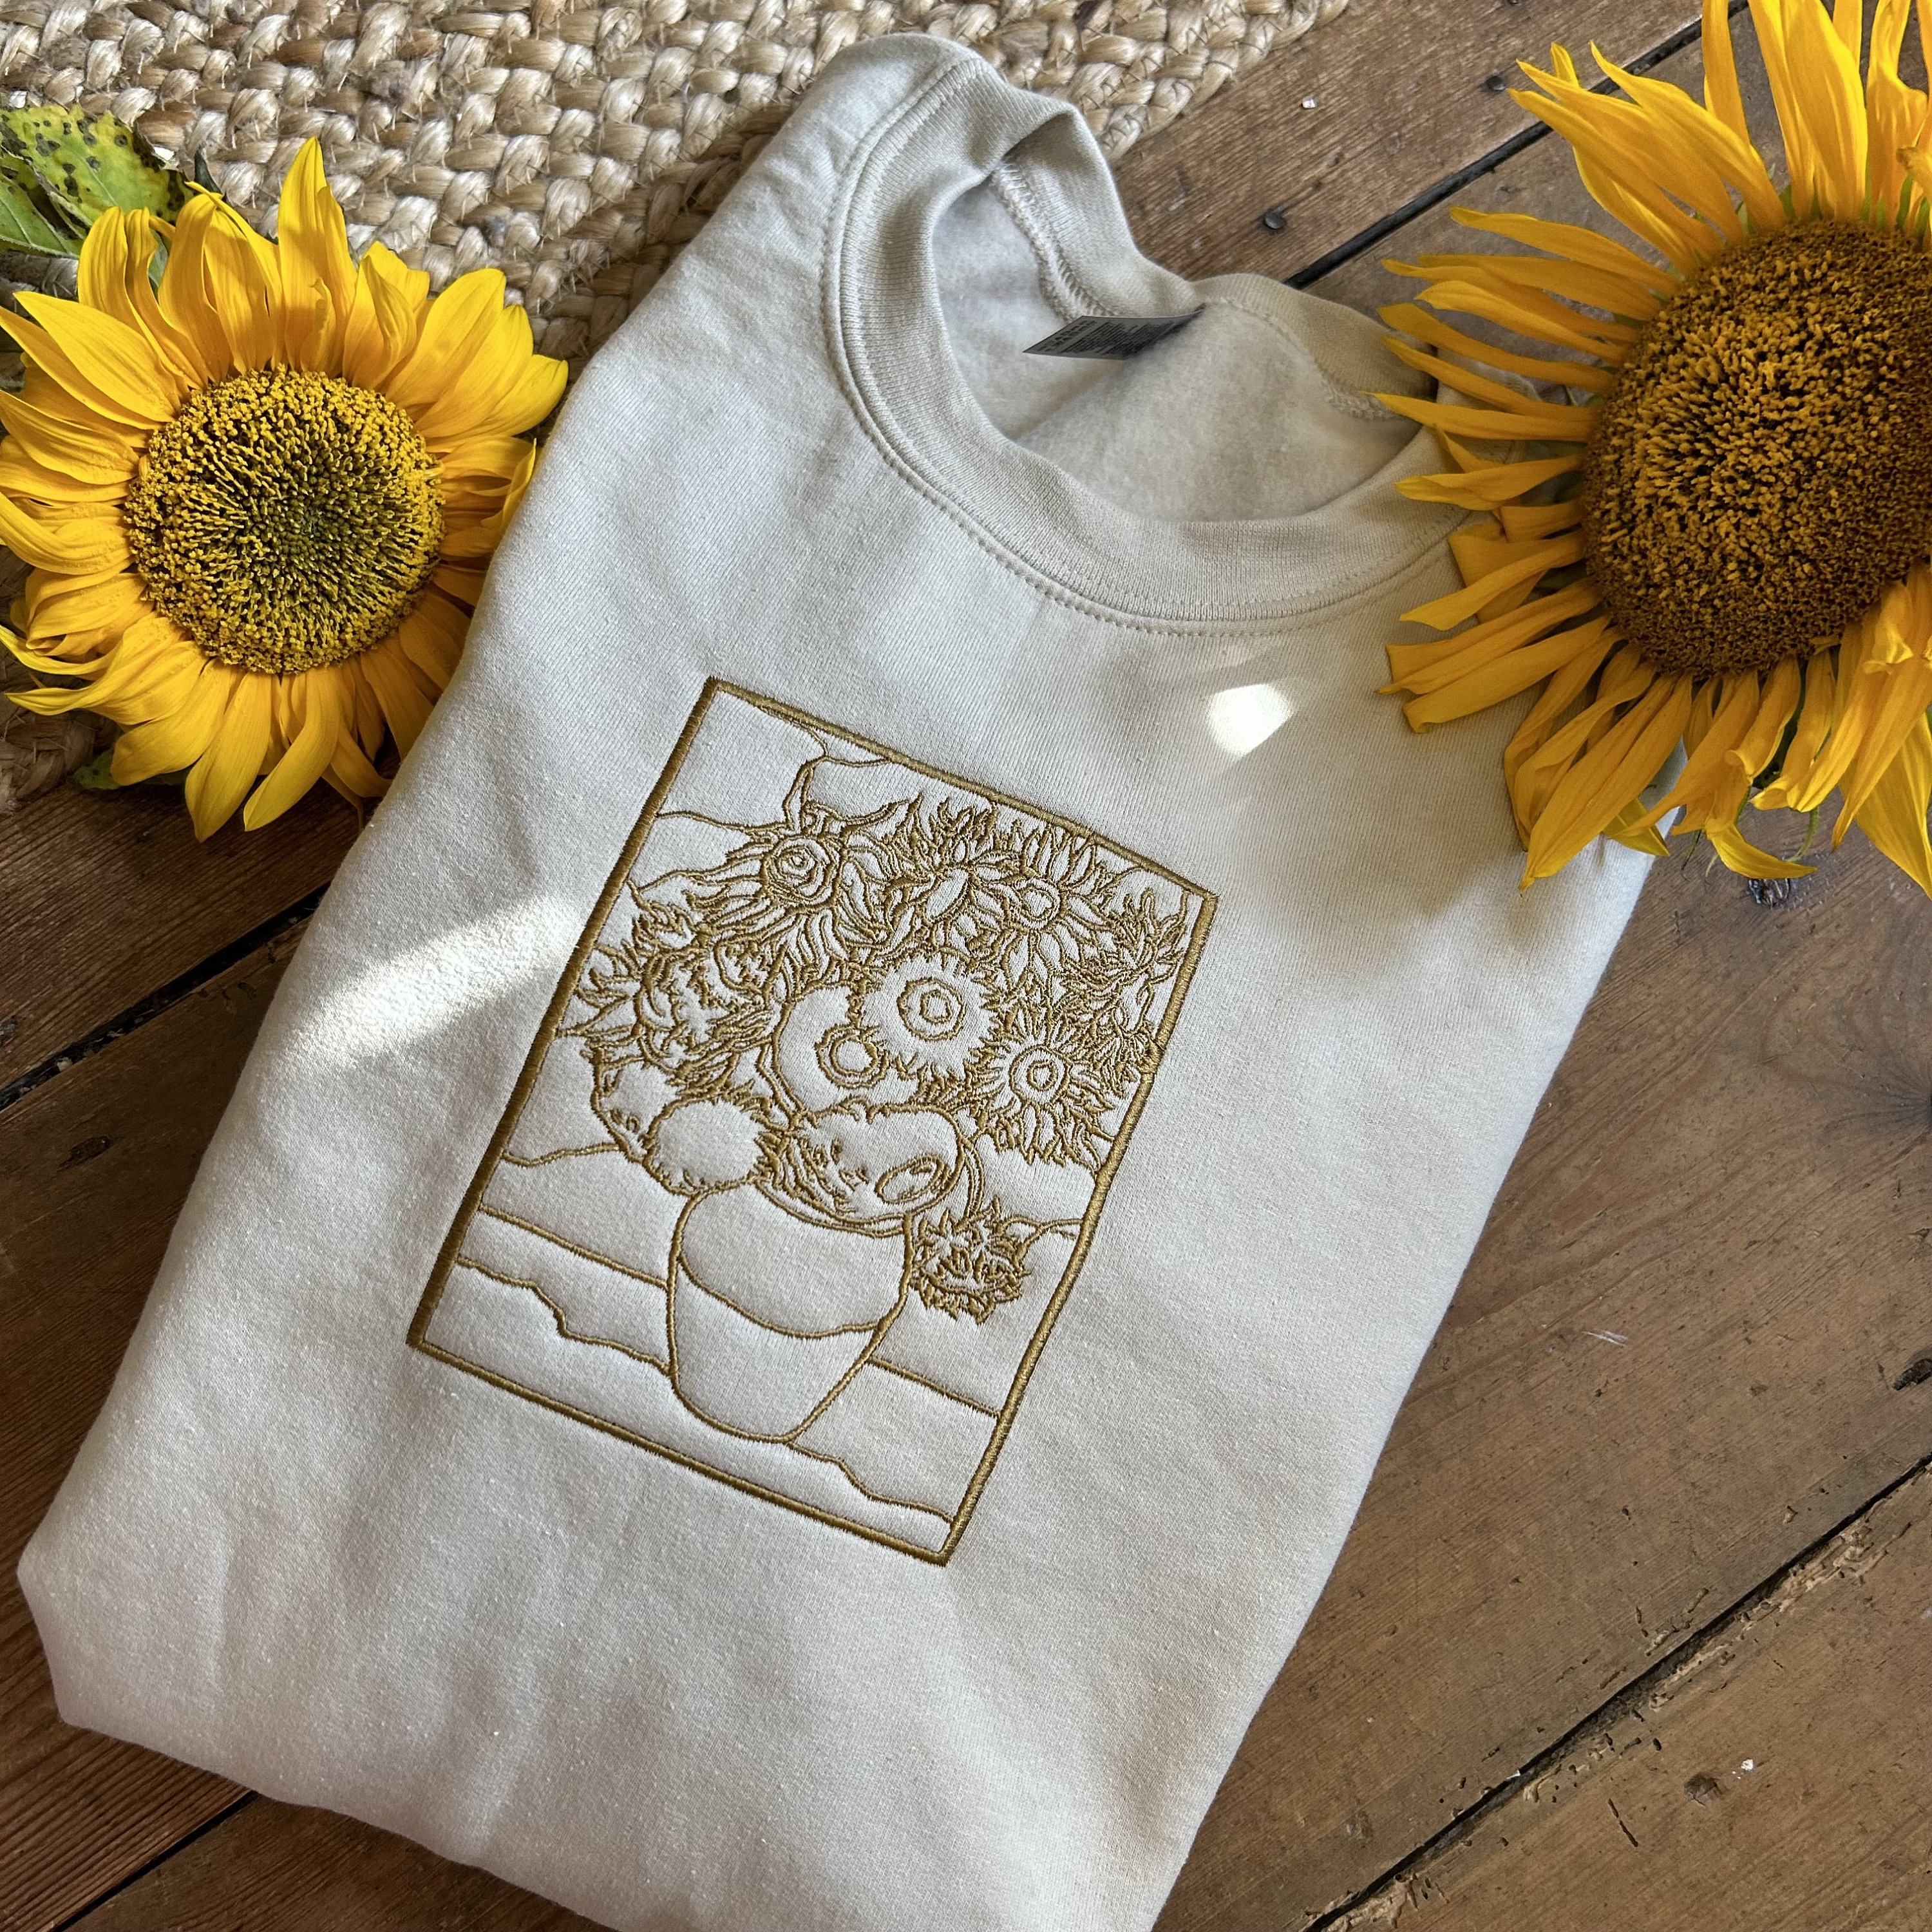 Sunflower Louis Tomlinson t-shirt